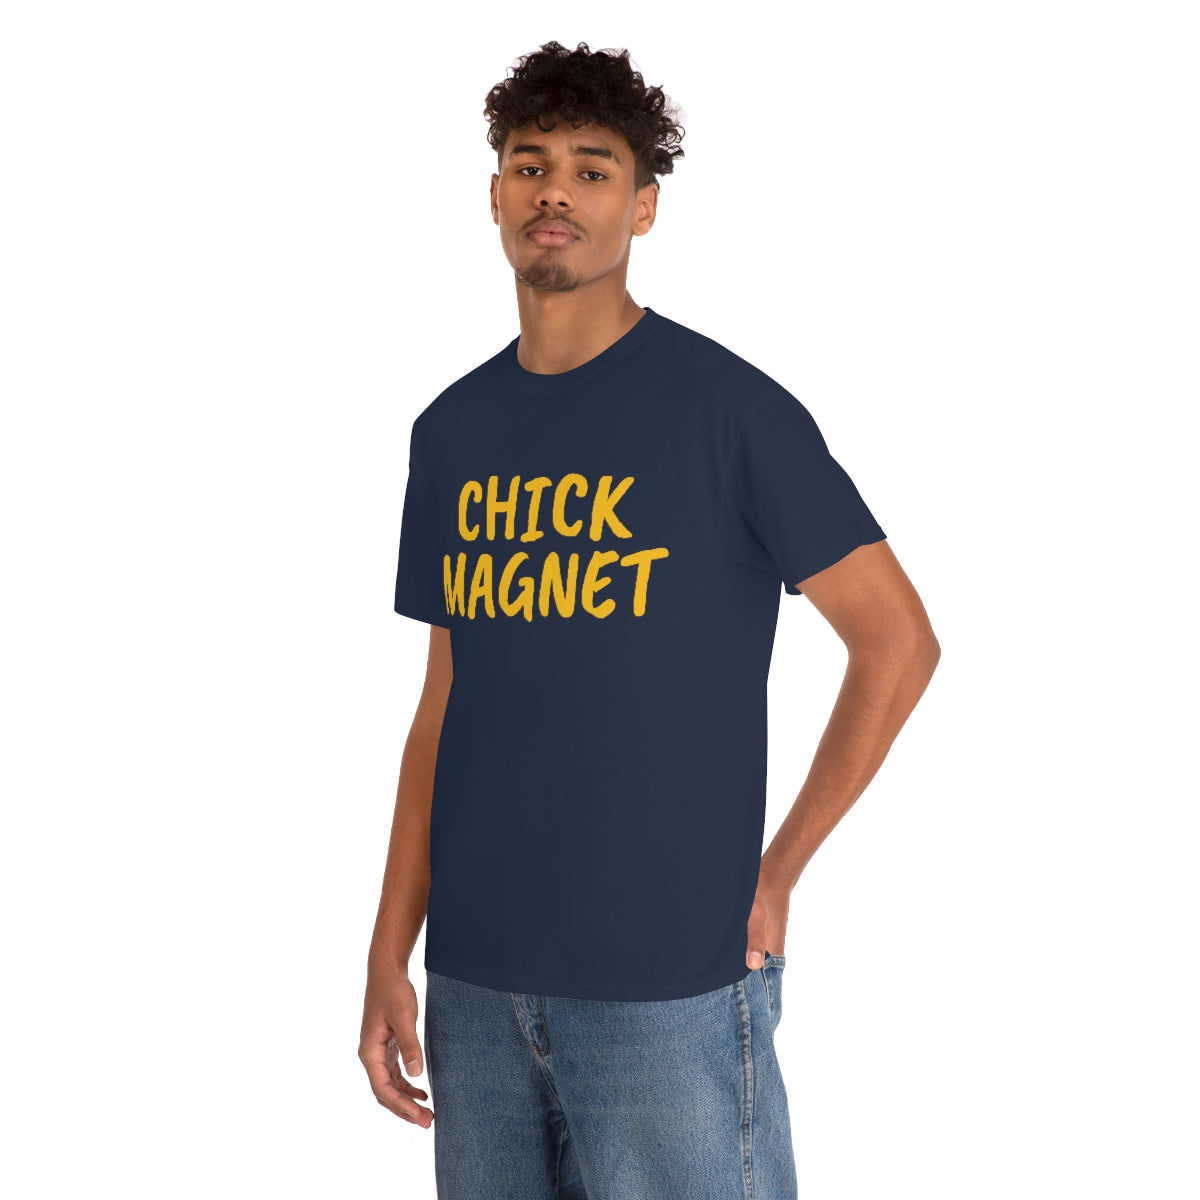 CHICK MAGNET T-SHIRT